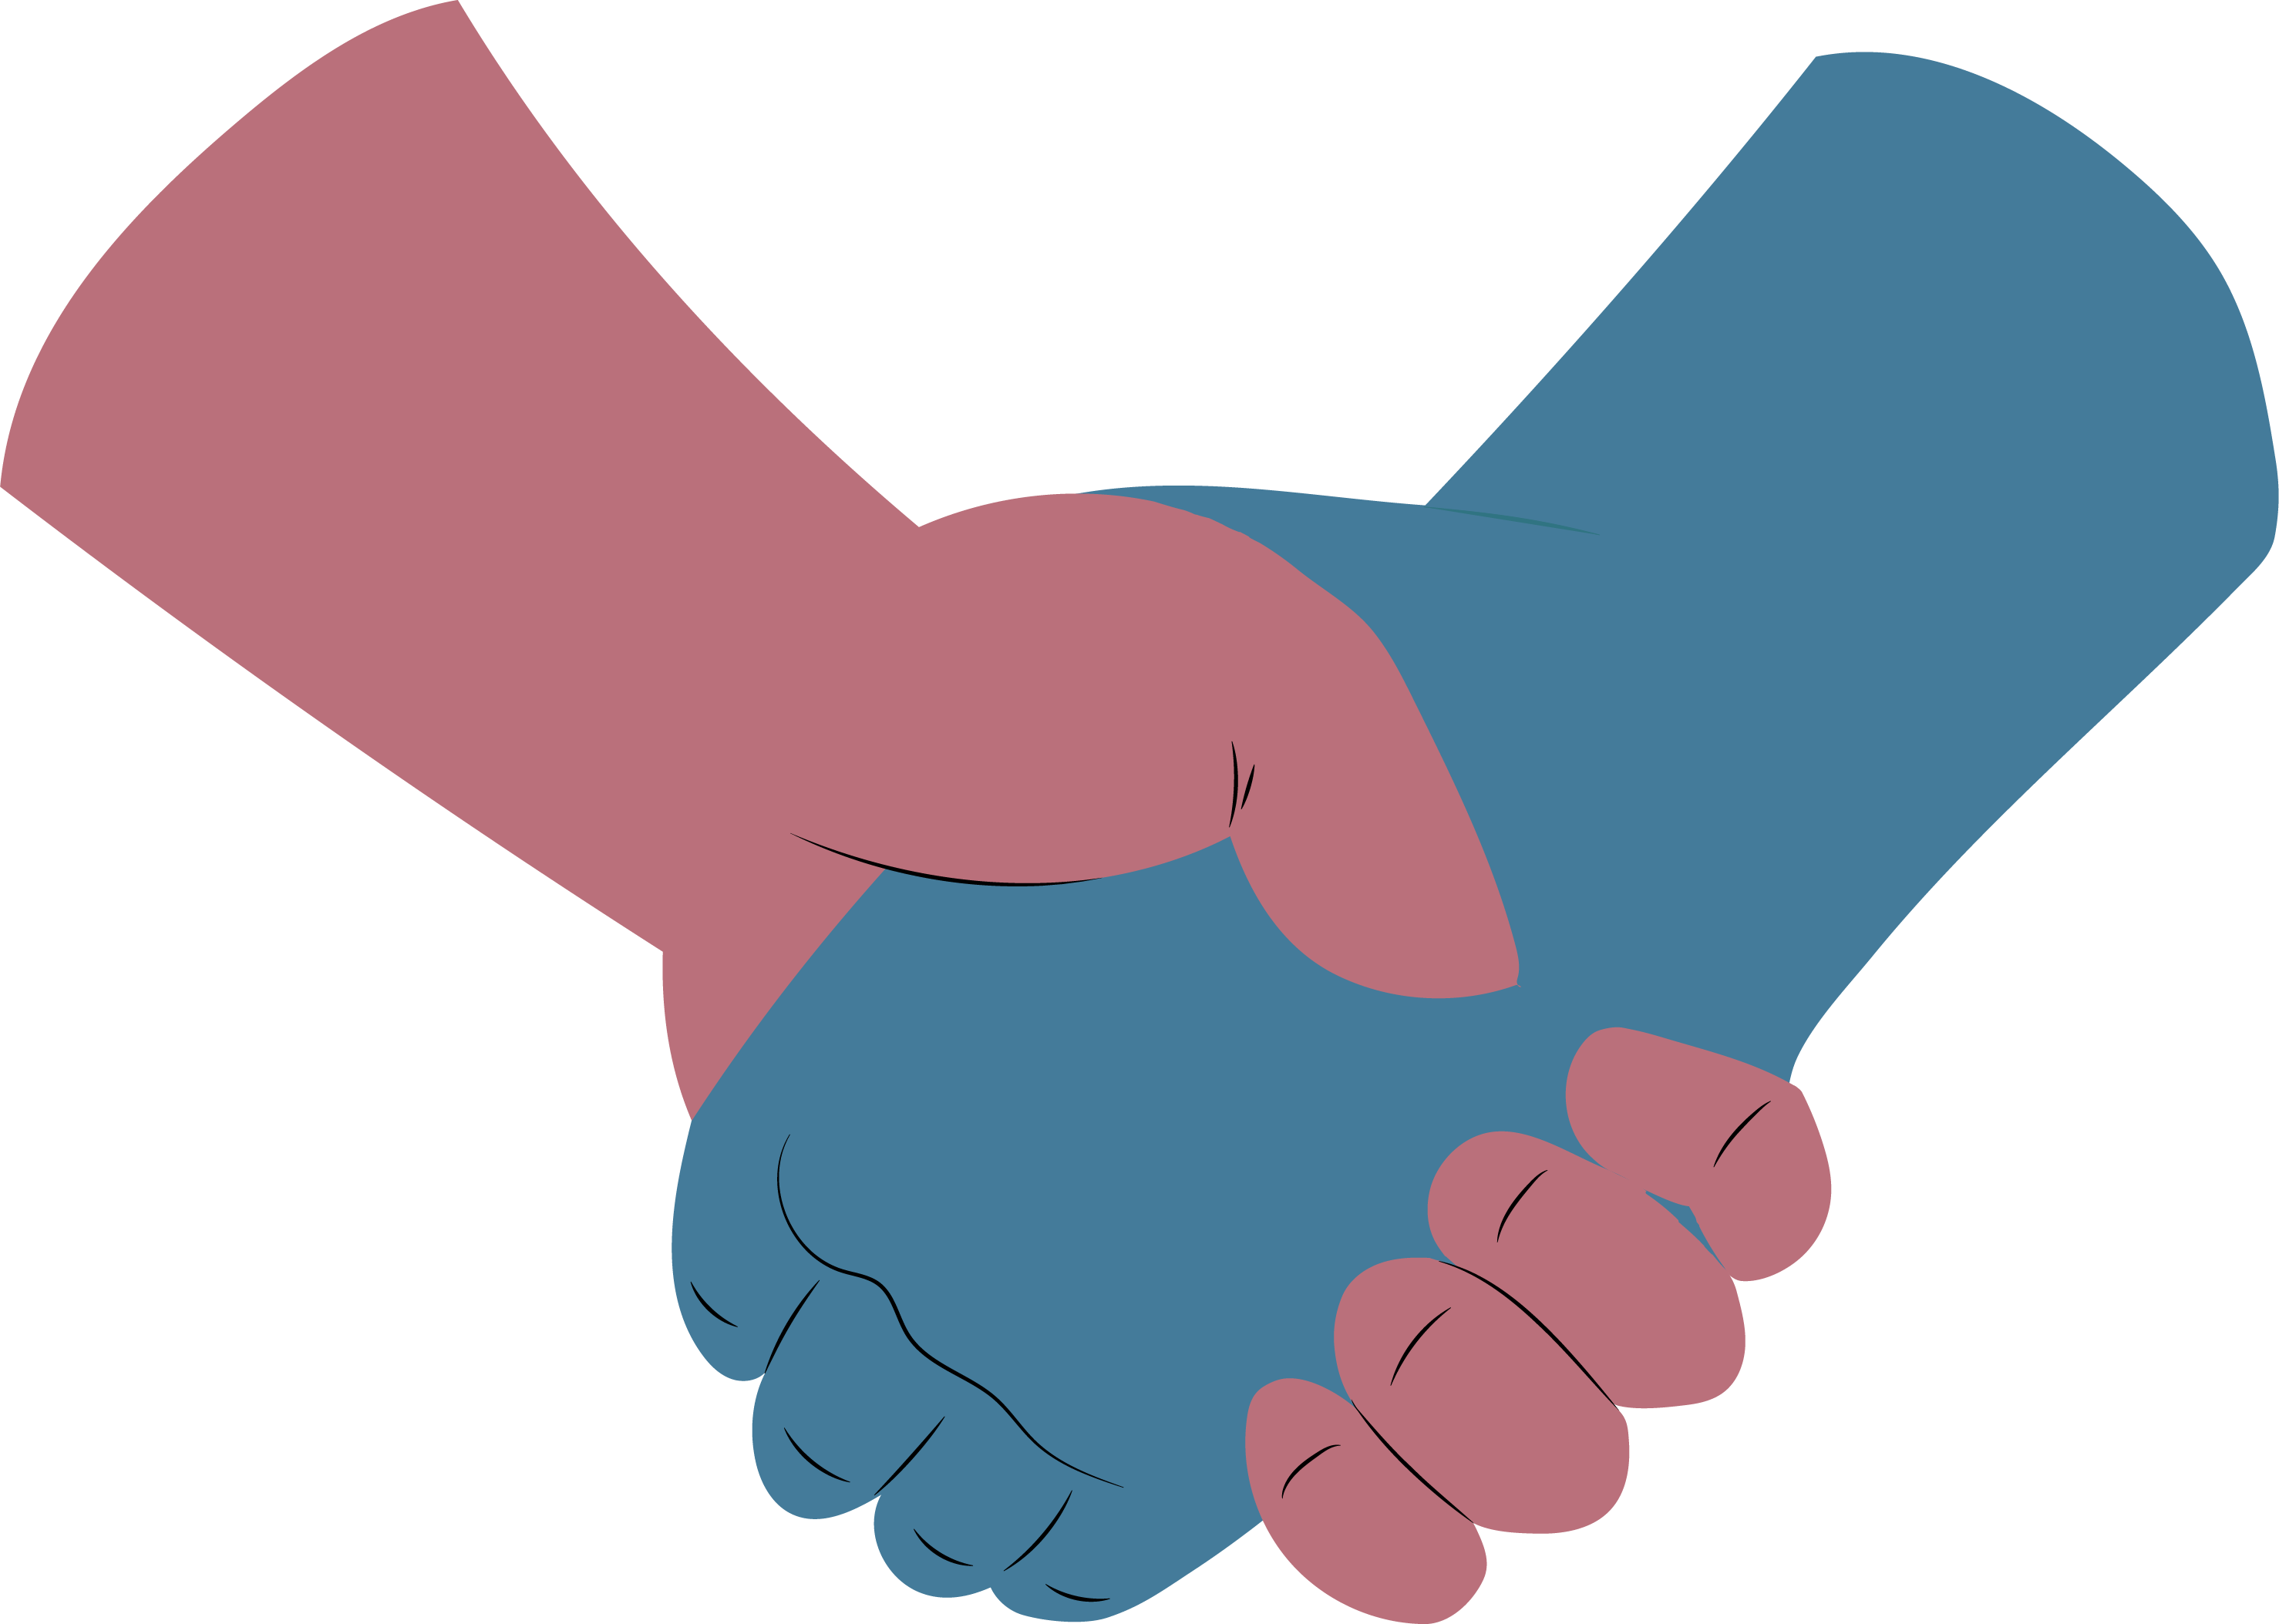 Digital Politics Red and Blue Handshake